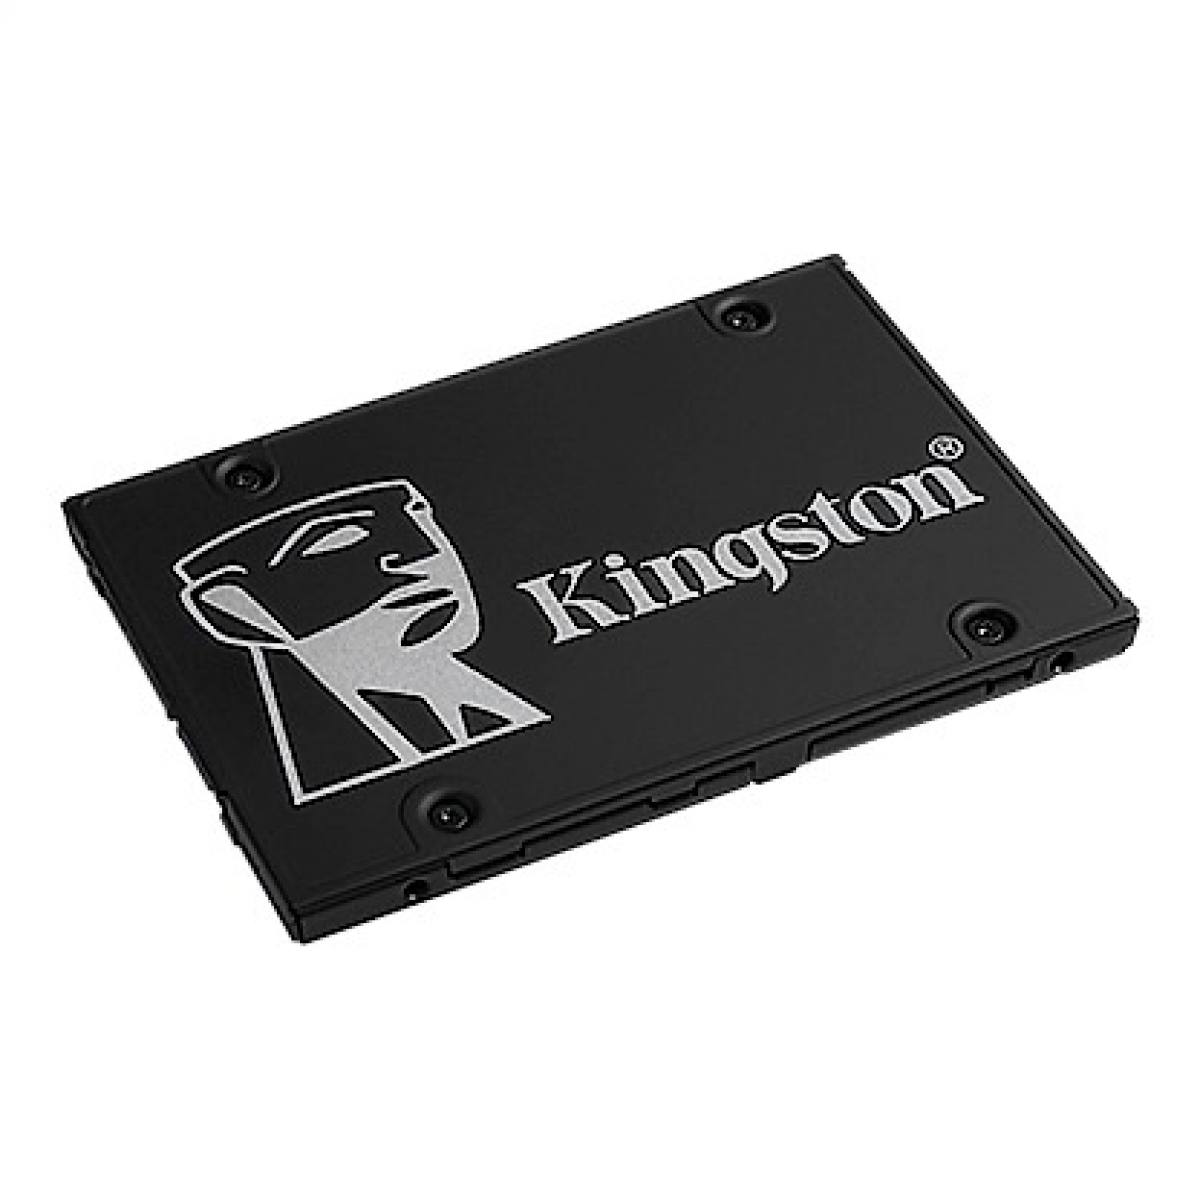 SSD Kingston SKC600 512GB SATA